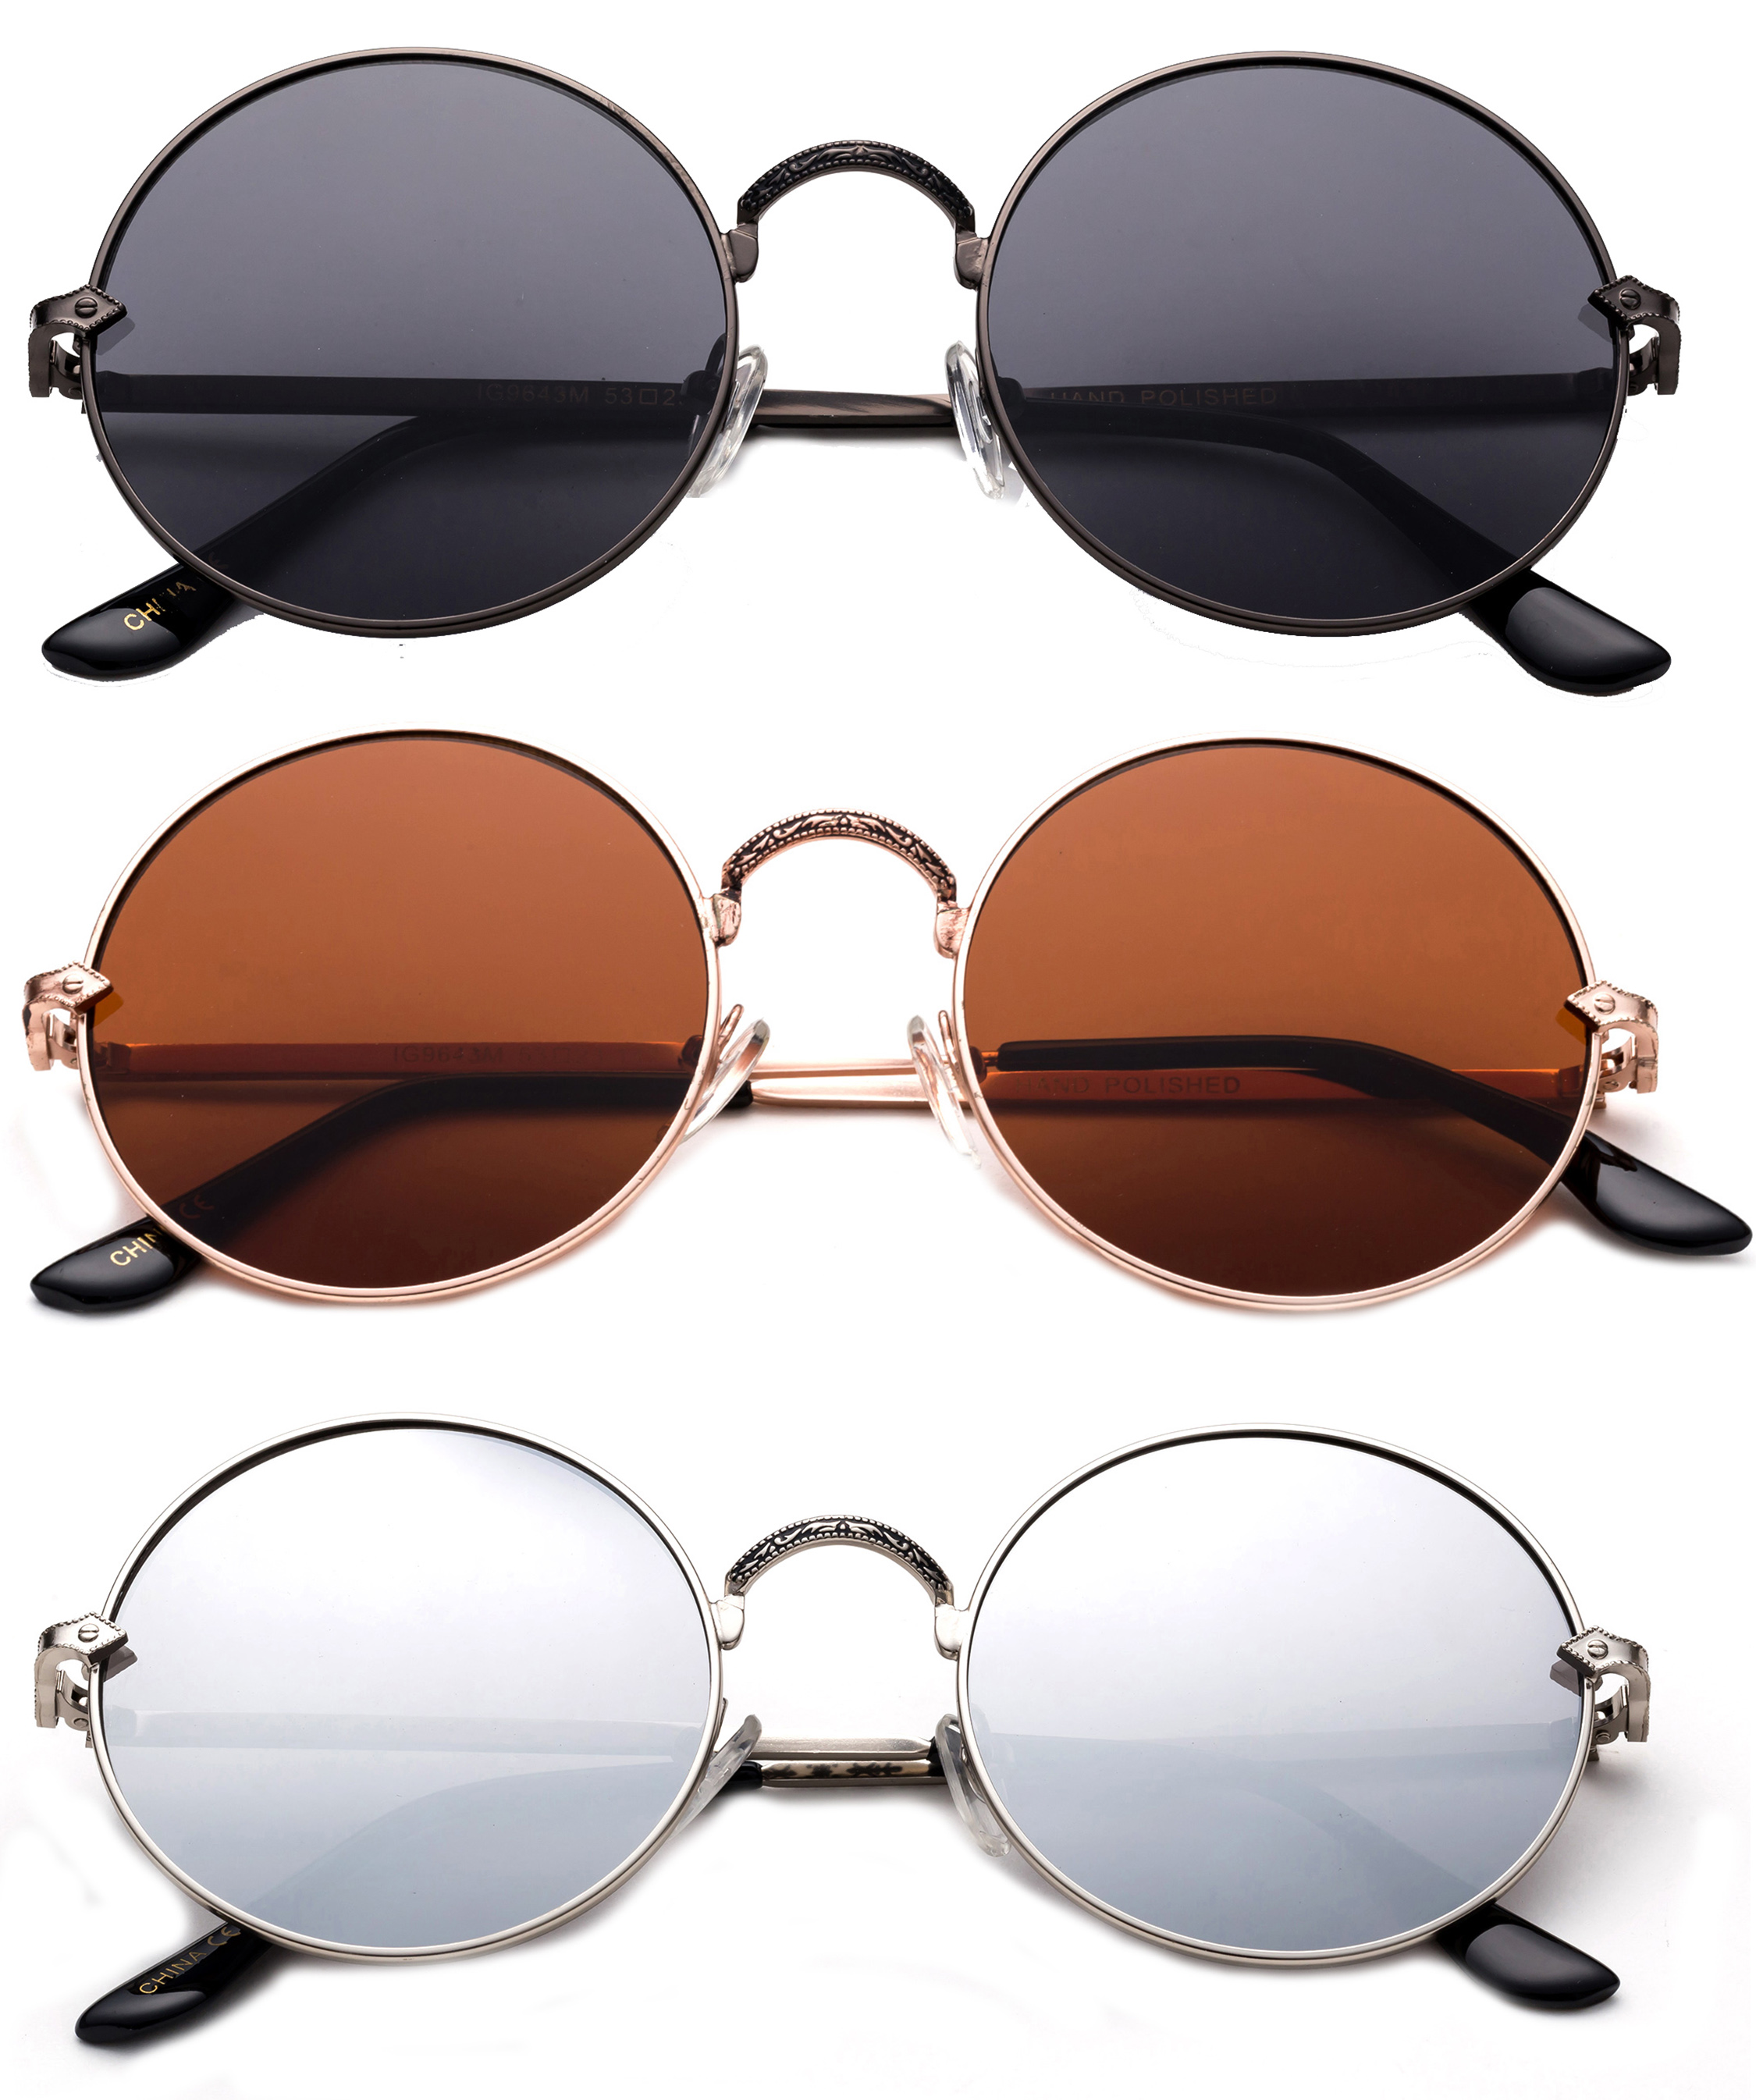 3 Pack Round Metal Frame Circle Rim Fashion Sunglasses for Women for Men, Gunmetal, Brown & Flash Mirror - image 1 of 2